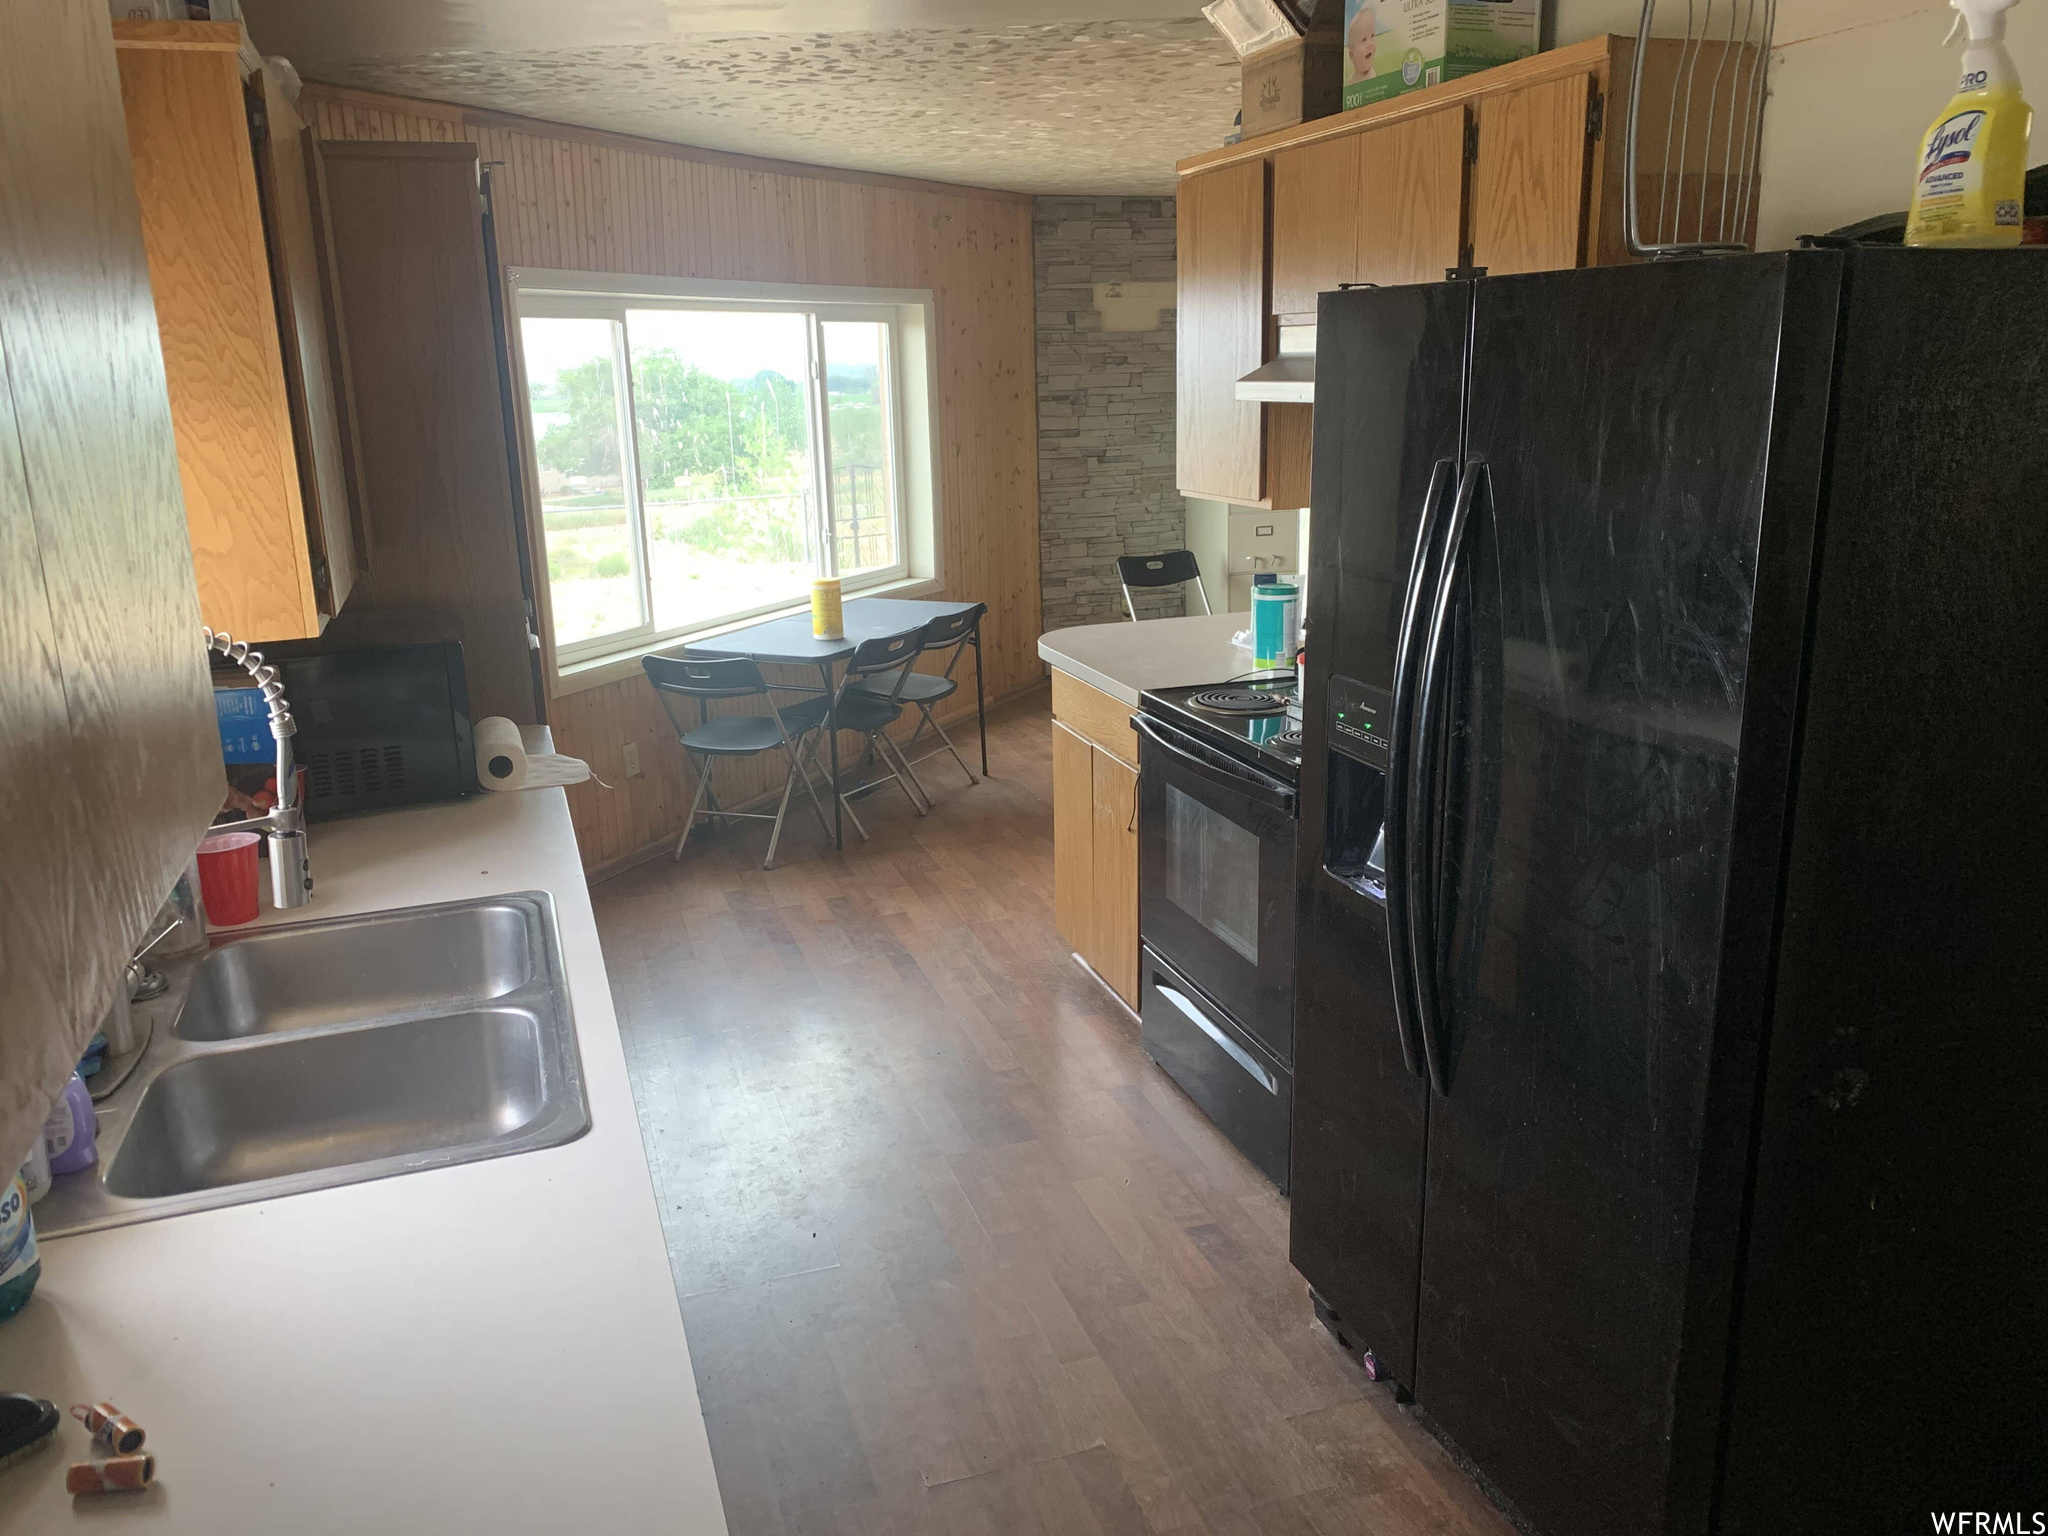 Kitchen with black appliances, a textured ceiling, dark hardwood flooring, and sink